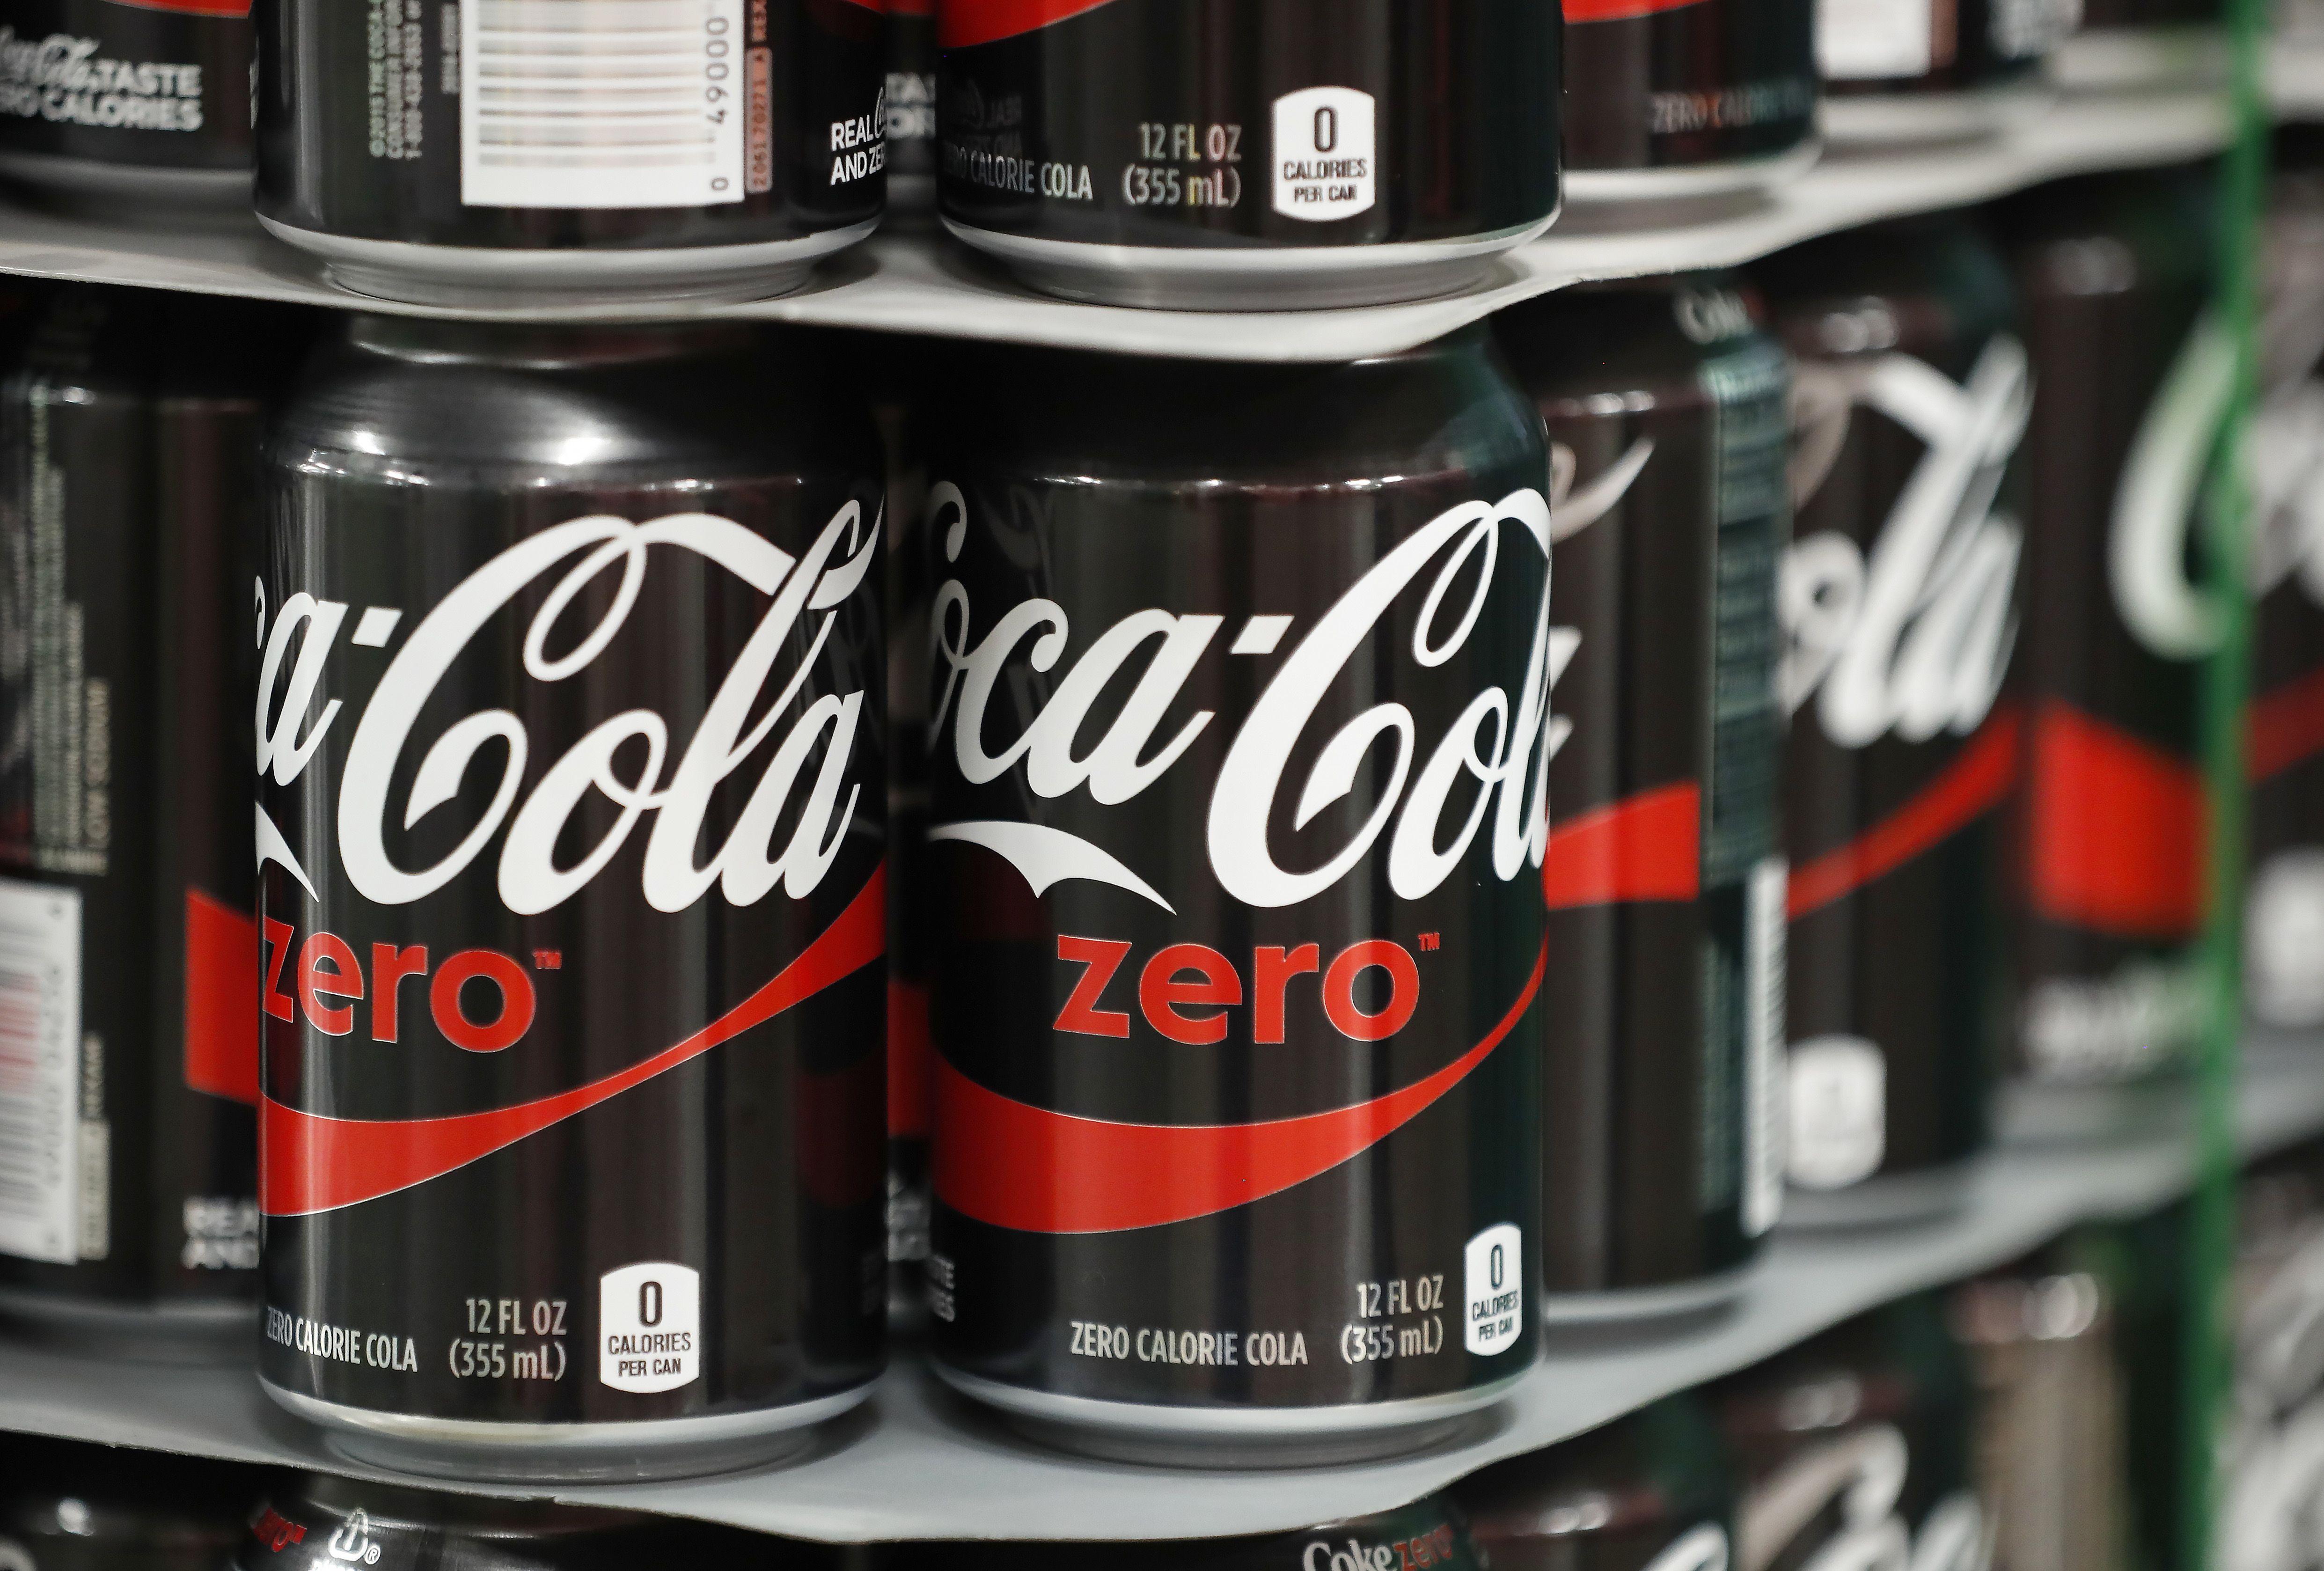 Coke Zero Logo - Coca-Cola UK redesigns Zero packaging to look like the original Coke